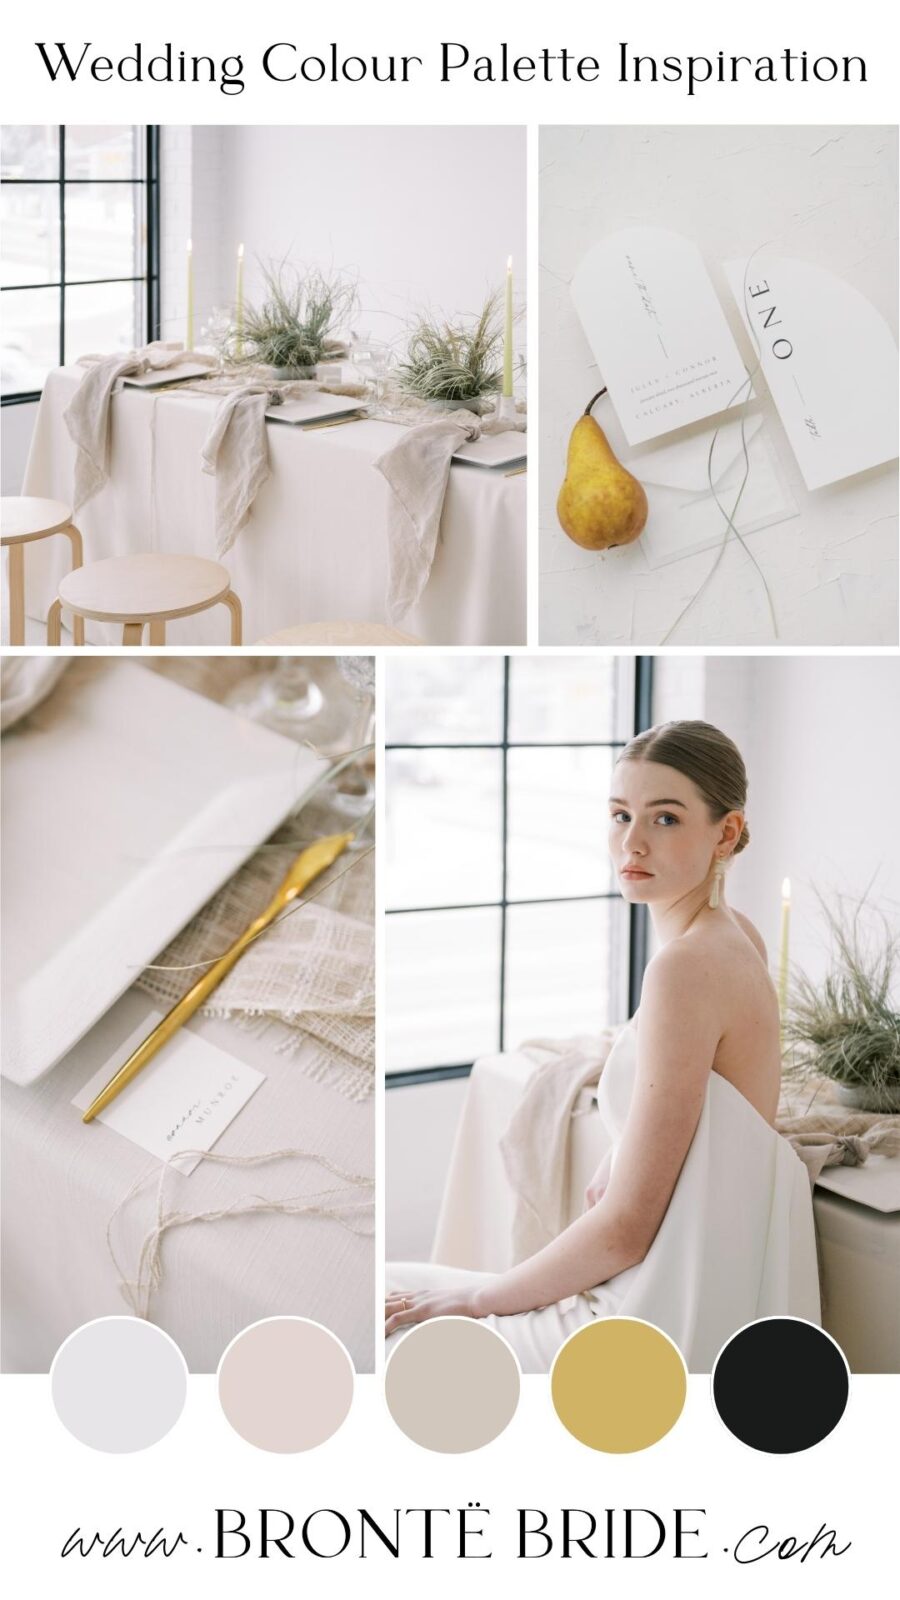 Modern Colour Palette Inspiration - Chic Neutral Wedding Inspiration